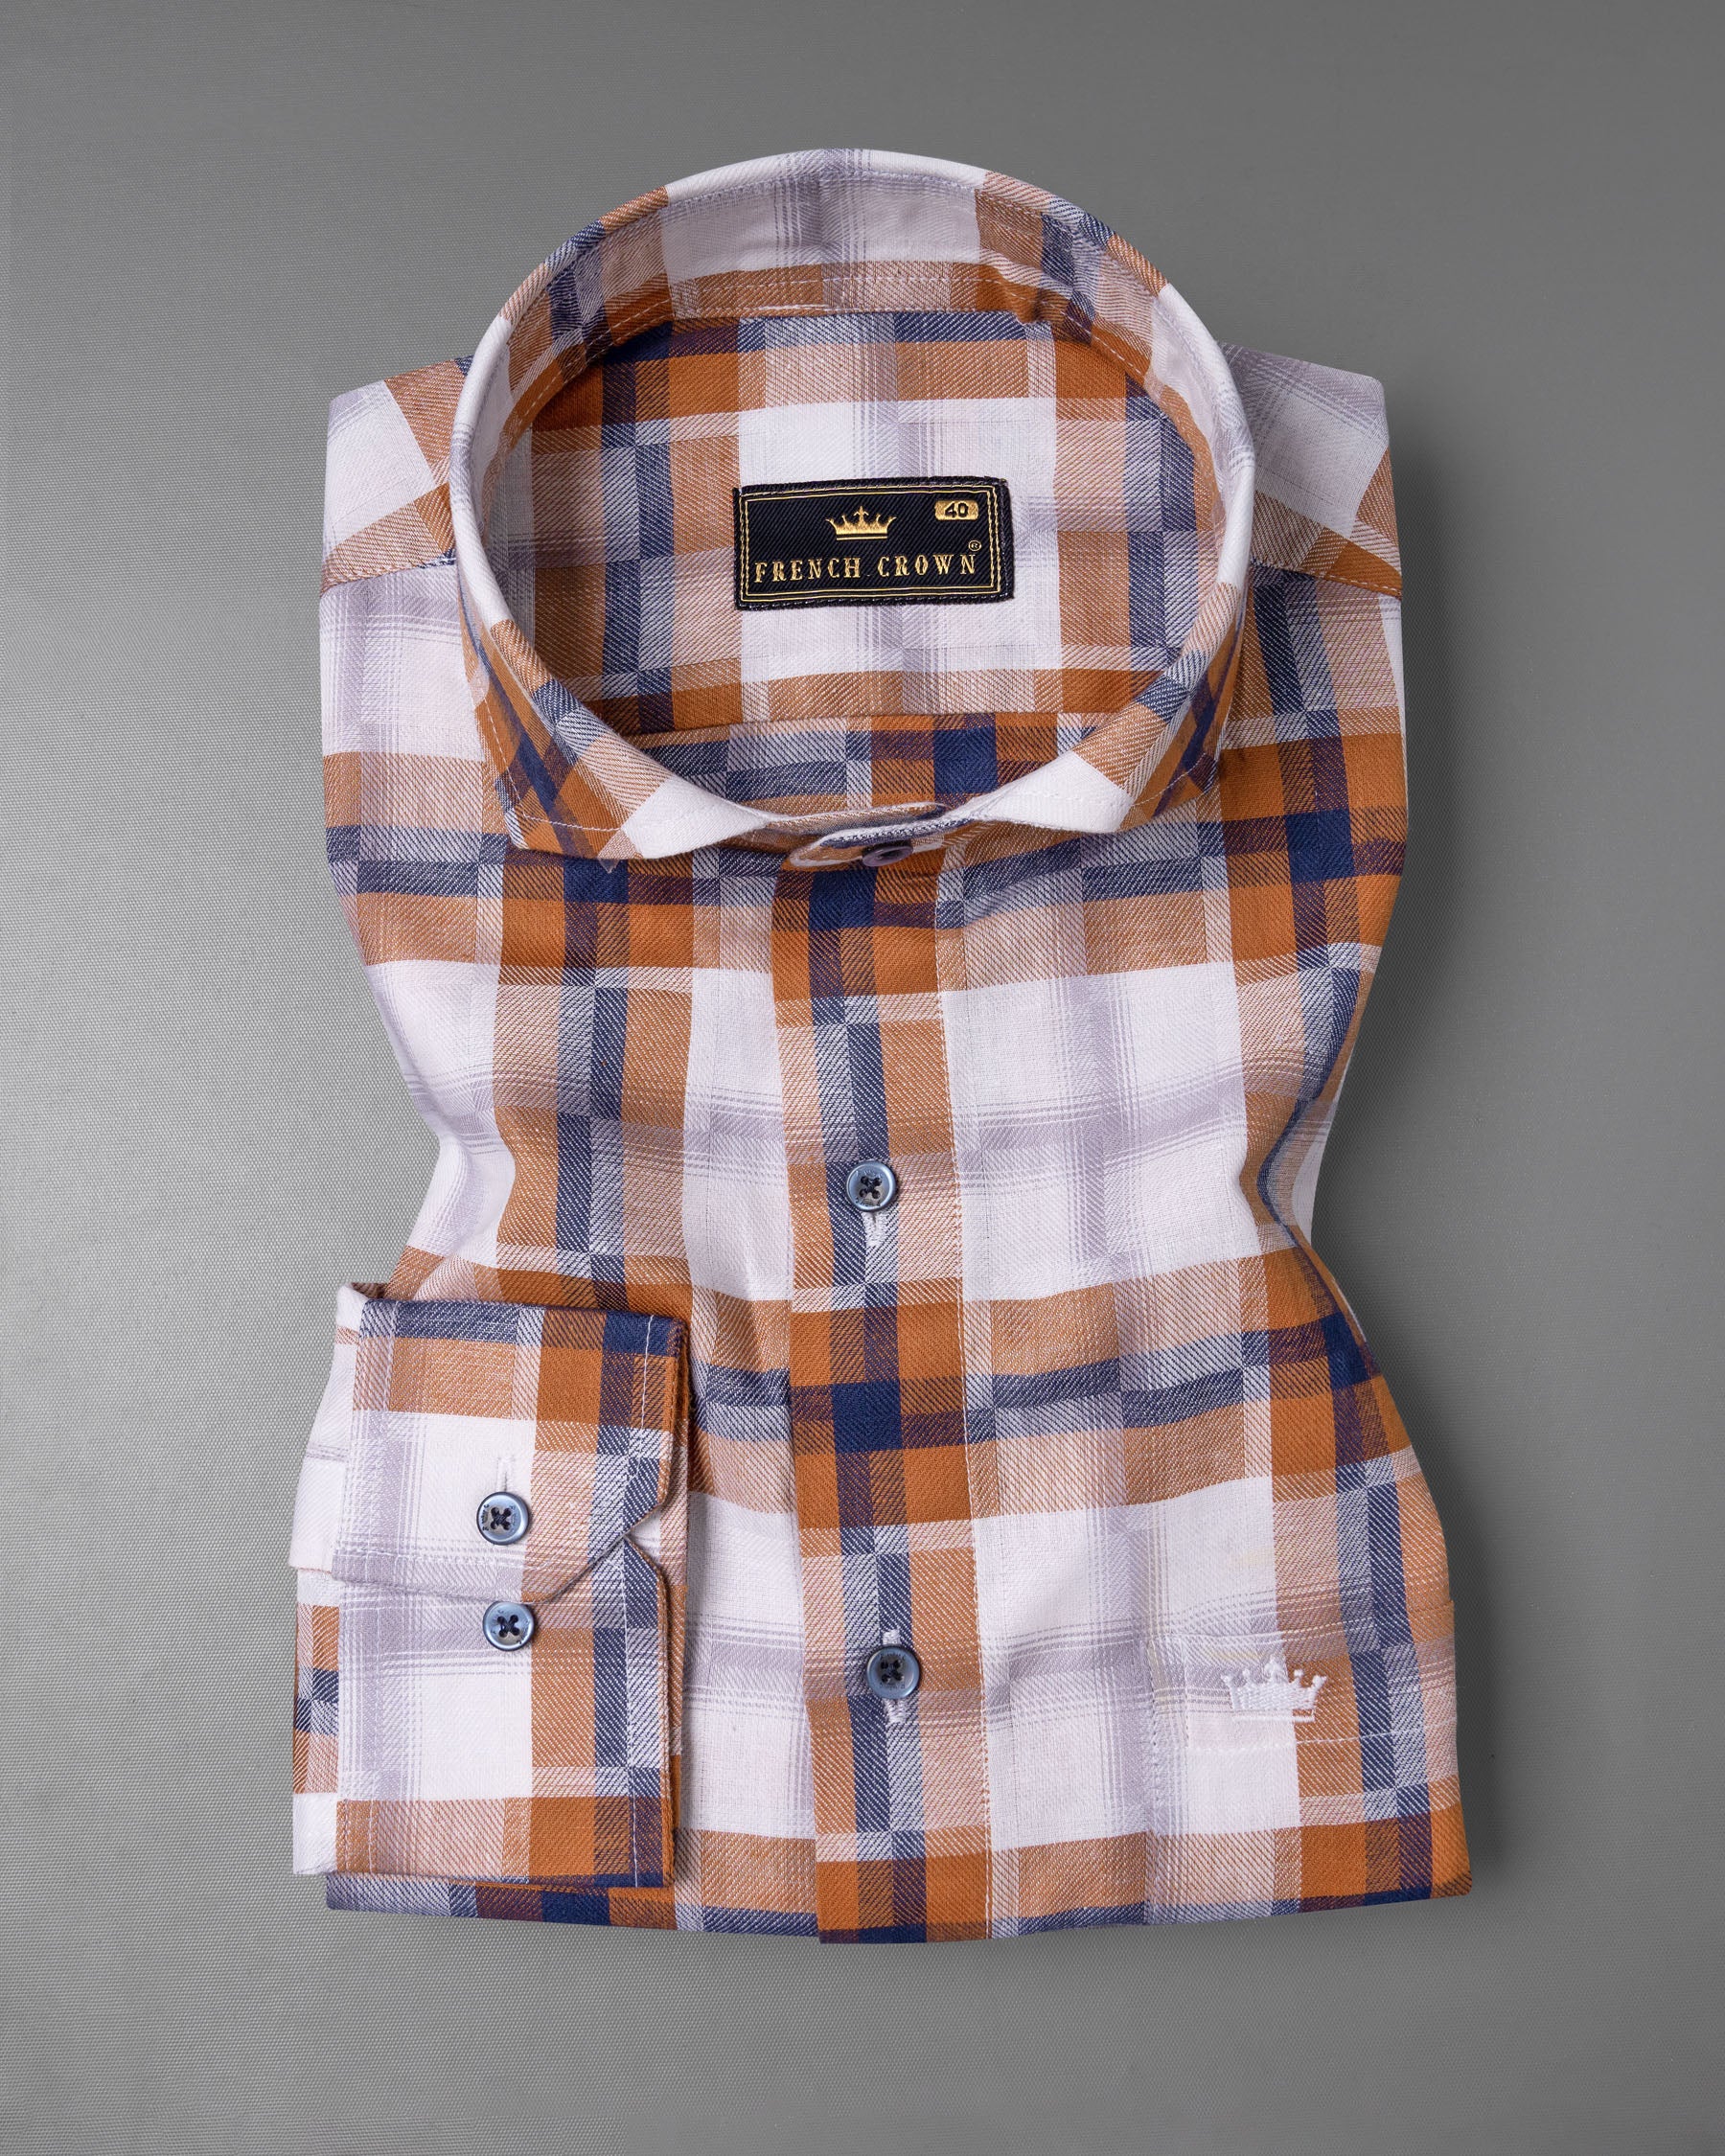 Tuscany Orange Twill Multicolour Checkered Premium Cotton Shirt 6284-CA-BLE-38, 6284-CA-BLE-H-38, 6284-CA-BLE-39, 6284-CA-BLE-H-39, 6284-CA-BLE-40, 6284-CA-BLE-H-40, 6284-CA-BLE-42, 6284-CA-BLE-H-42, 6284-CA-BLE-44, 6284-CA-BLE-H-44, 6284-CA-BLE-46, 6284-CA-BLE-H-46, 6284-CA-BLE-48, 6284-CA-BLE-H-48, 6284-CA-BLE-50, 6284-CA-BLE-H-50, 6284-CA-BLE-52, 6284-CA-BLE-H-52